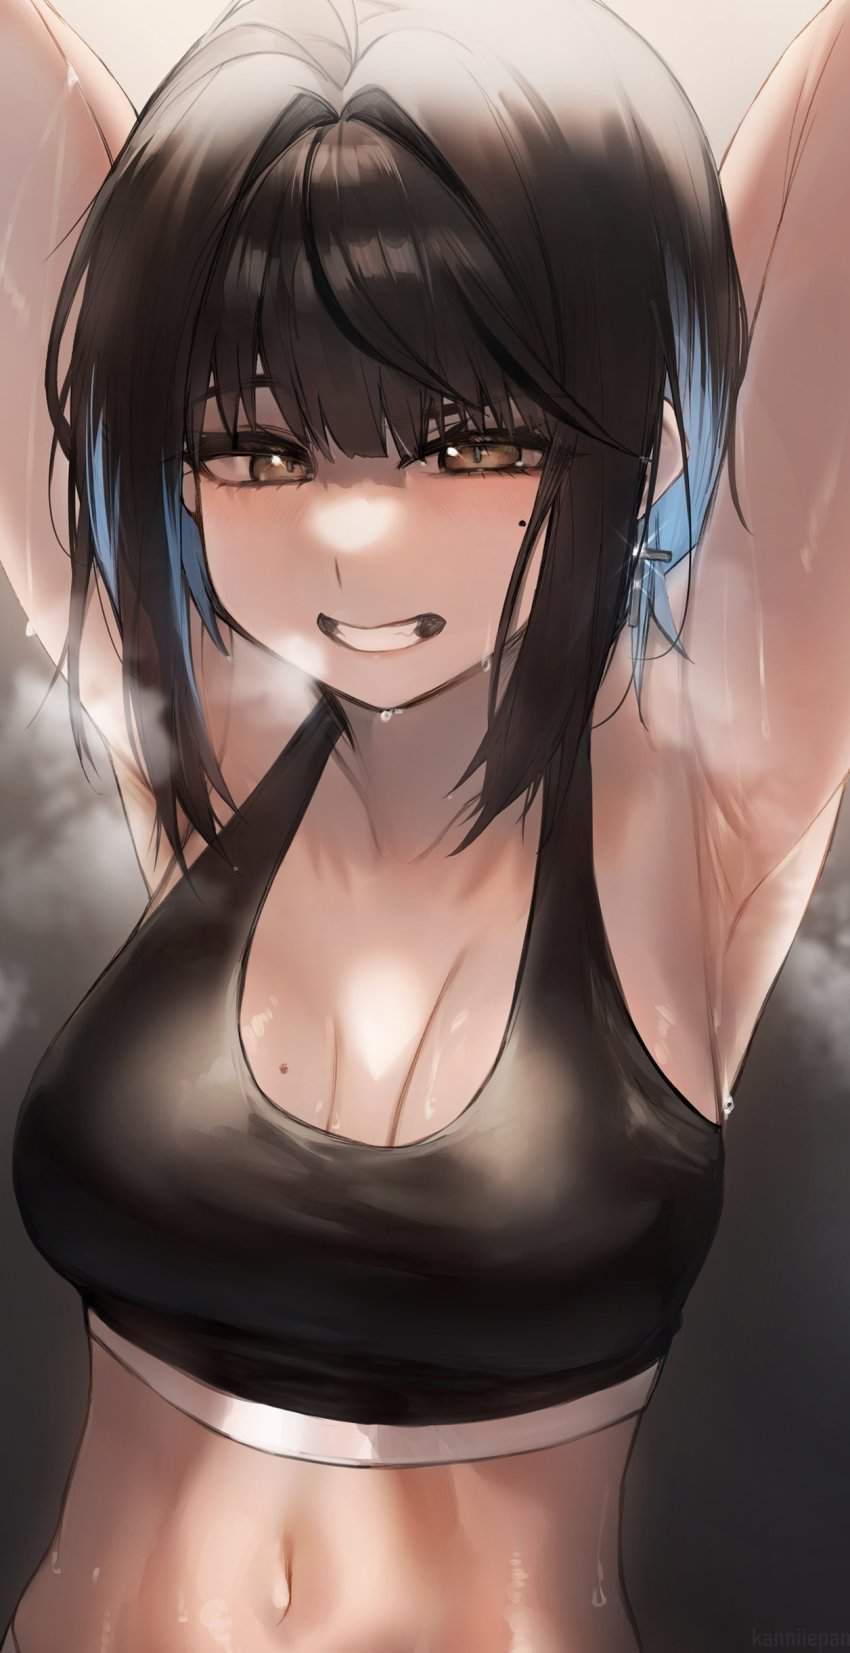 【Summer Fun】Erotic image of sweaty female armpits 18